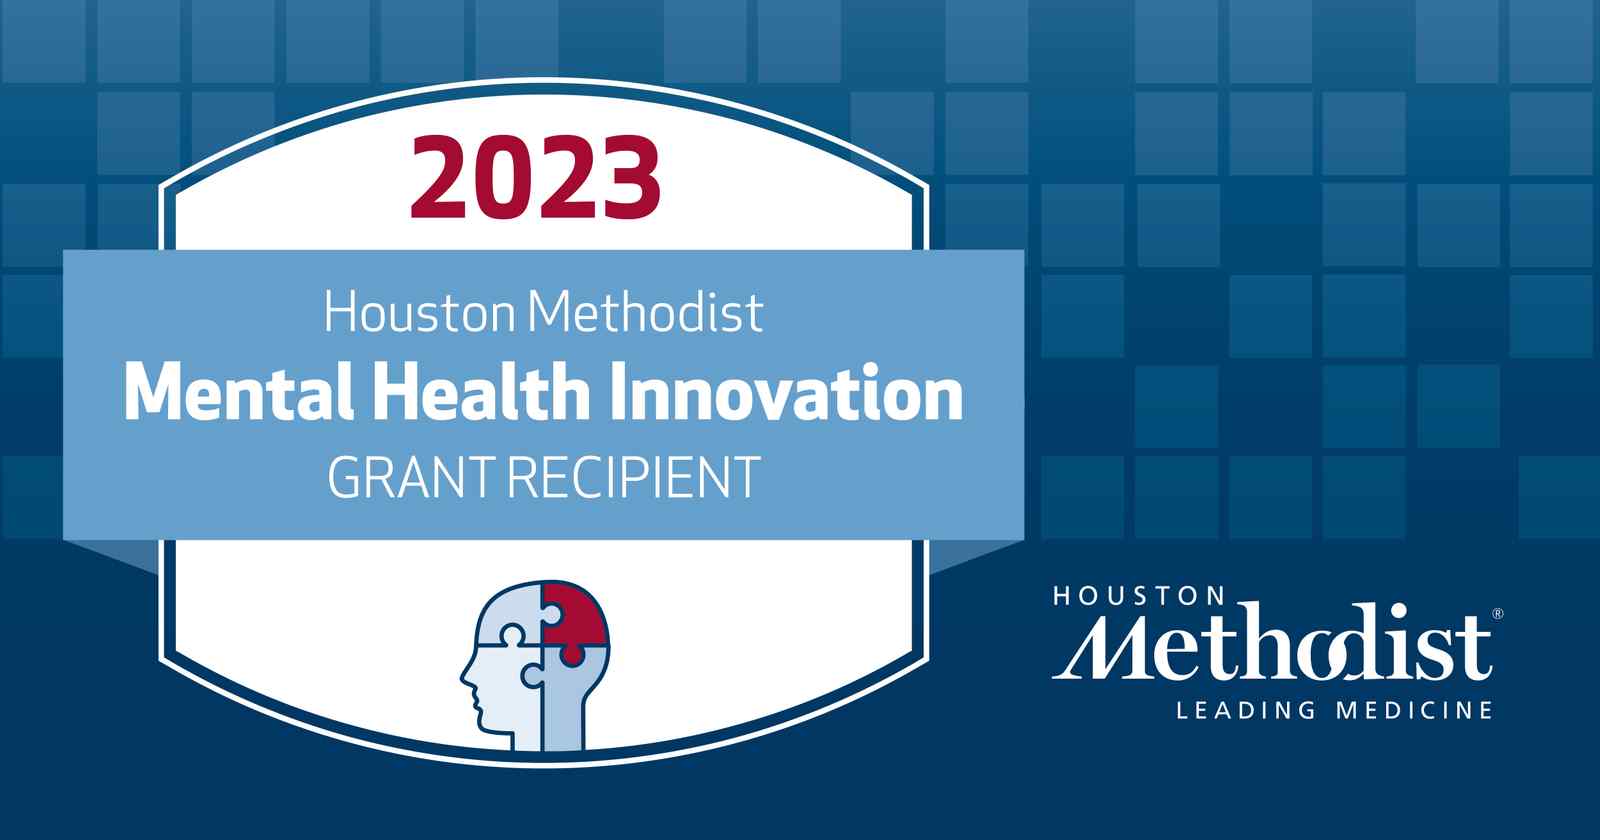 AccessHealth Awarded 2023 Houston Methodist Mental Health Innovation Grant